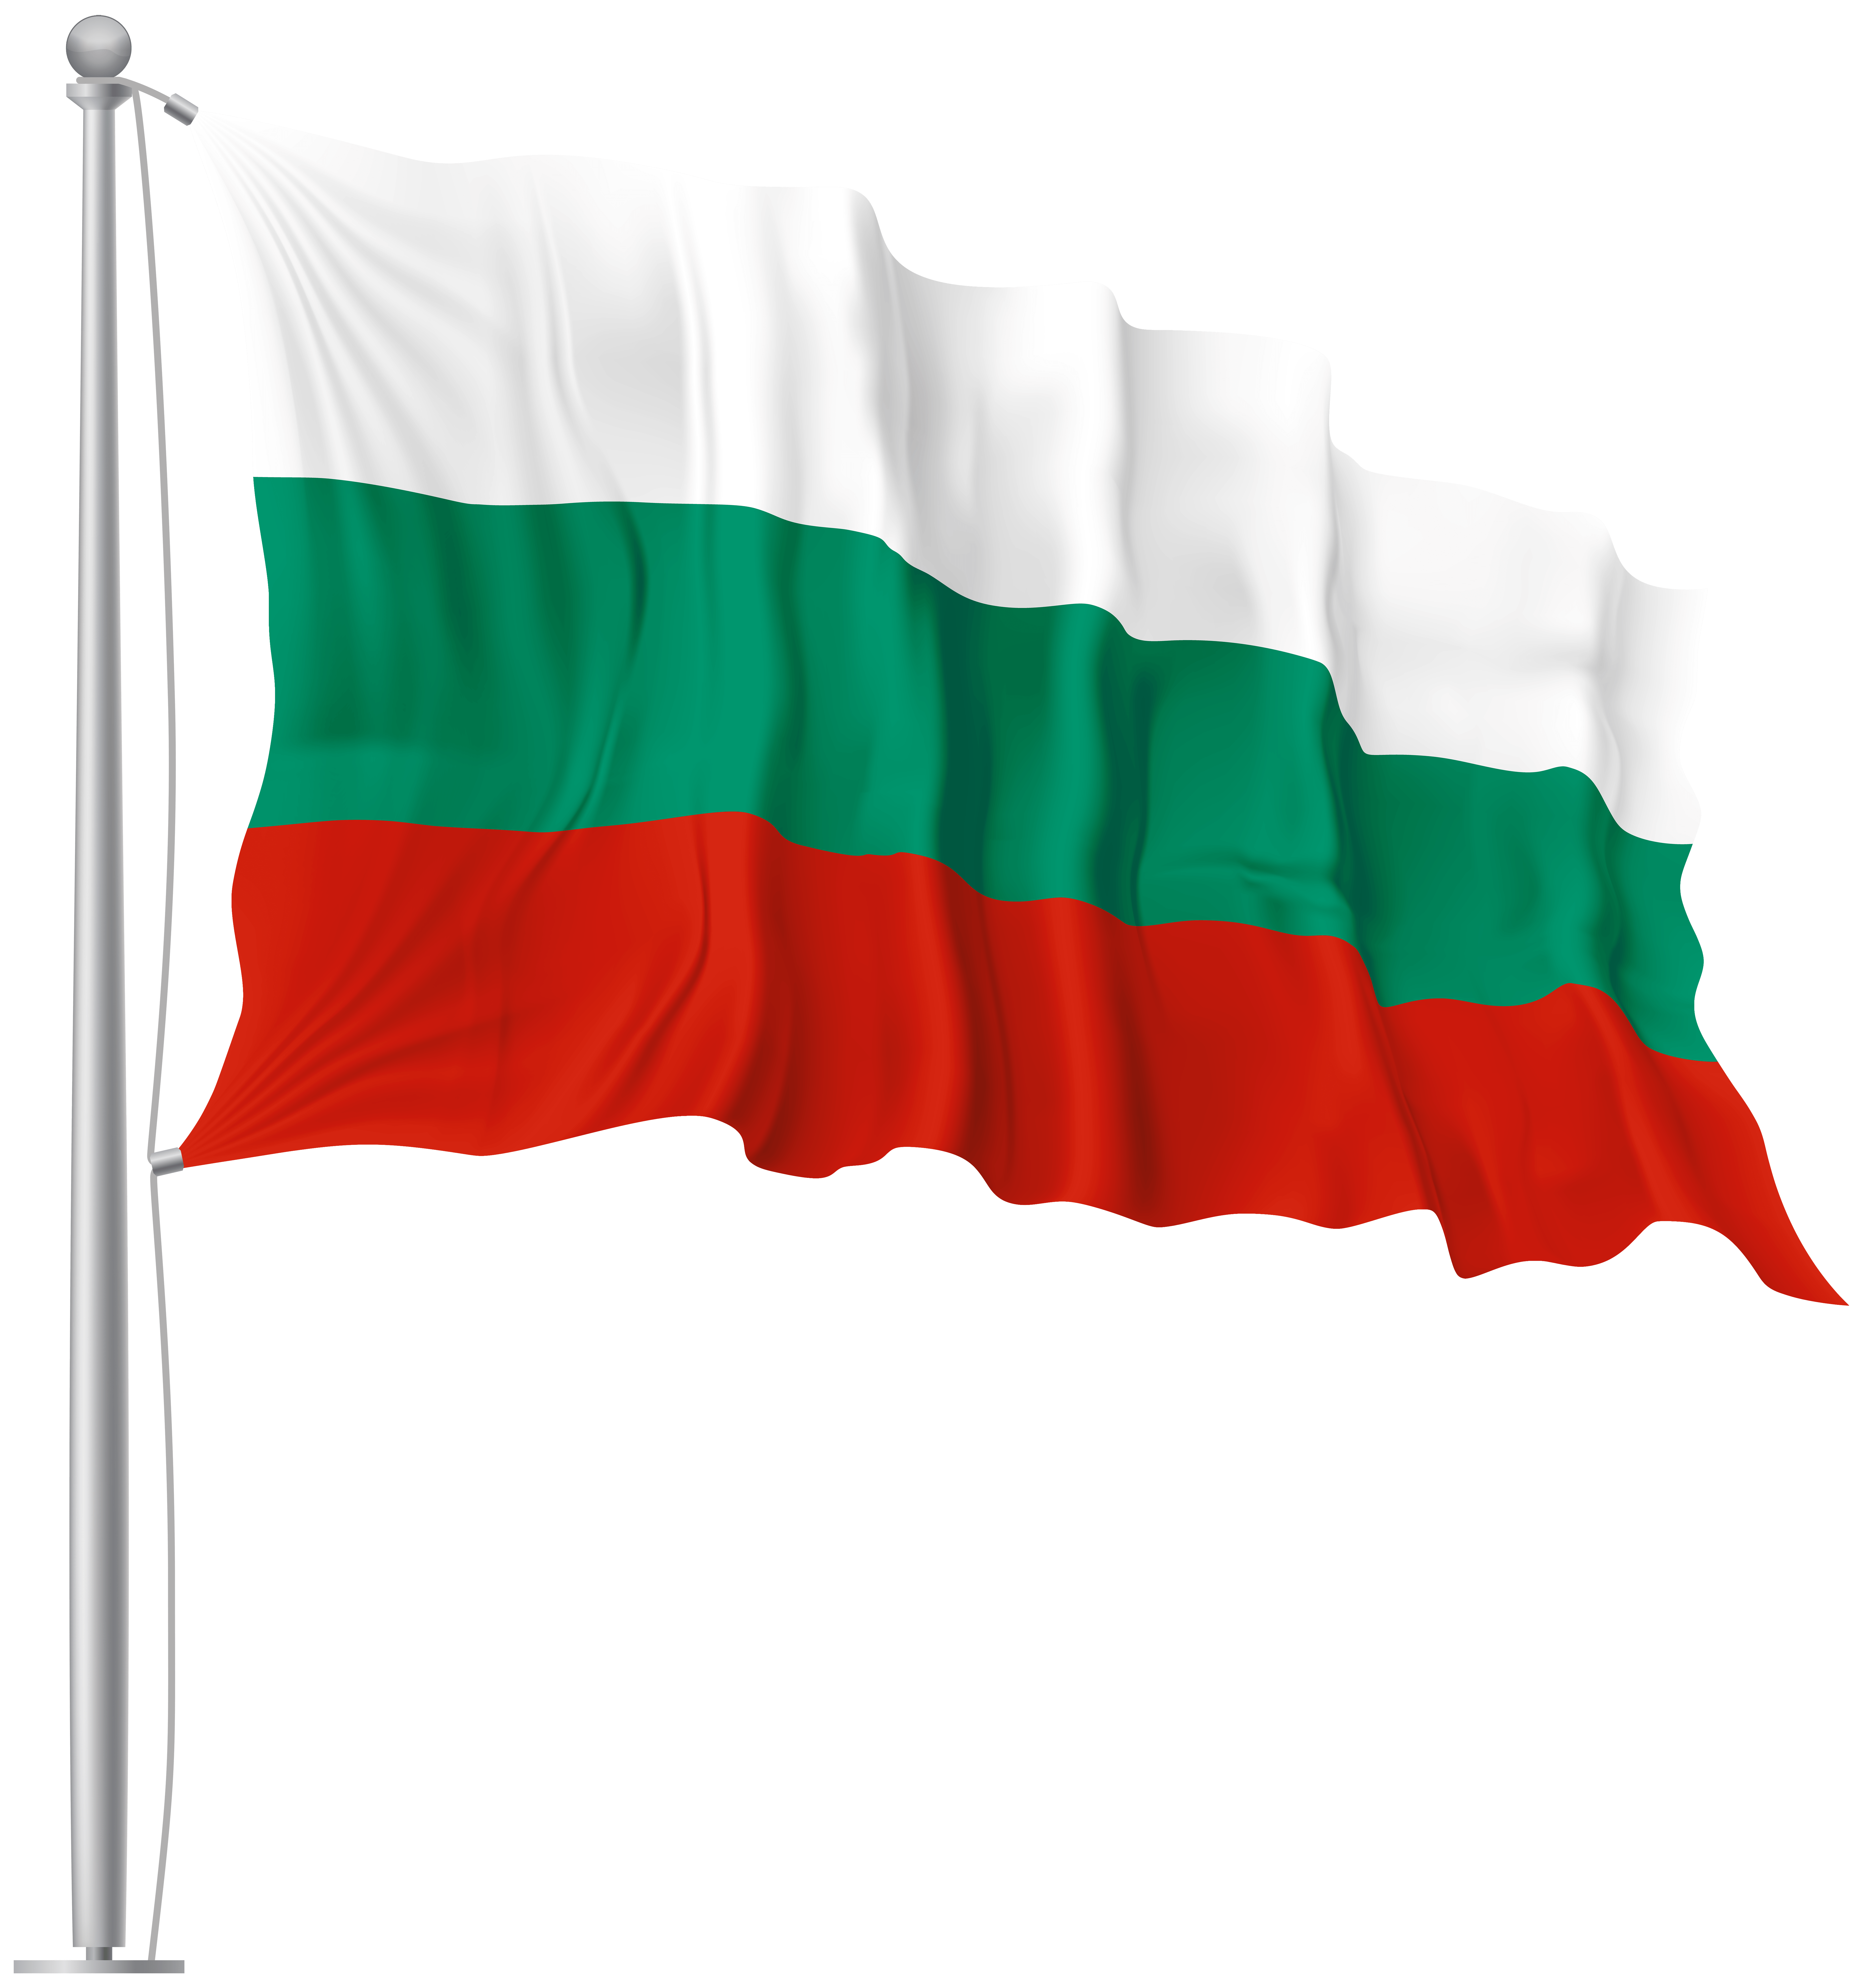 Bulgaria Waving Flag PNG Image